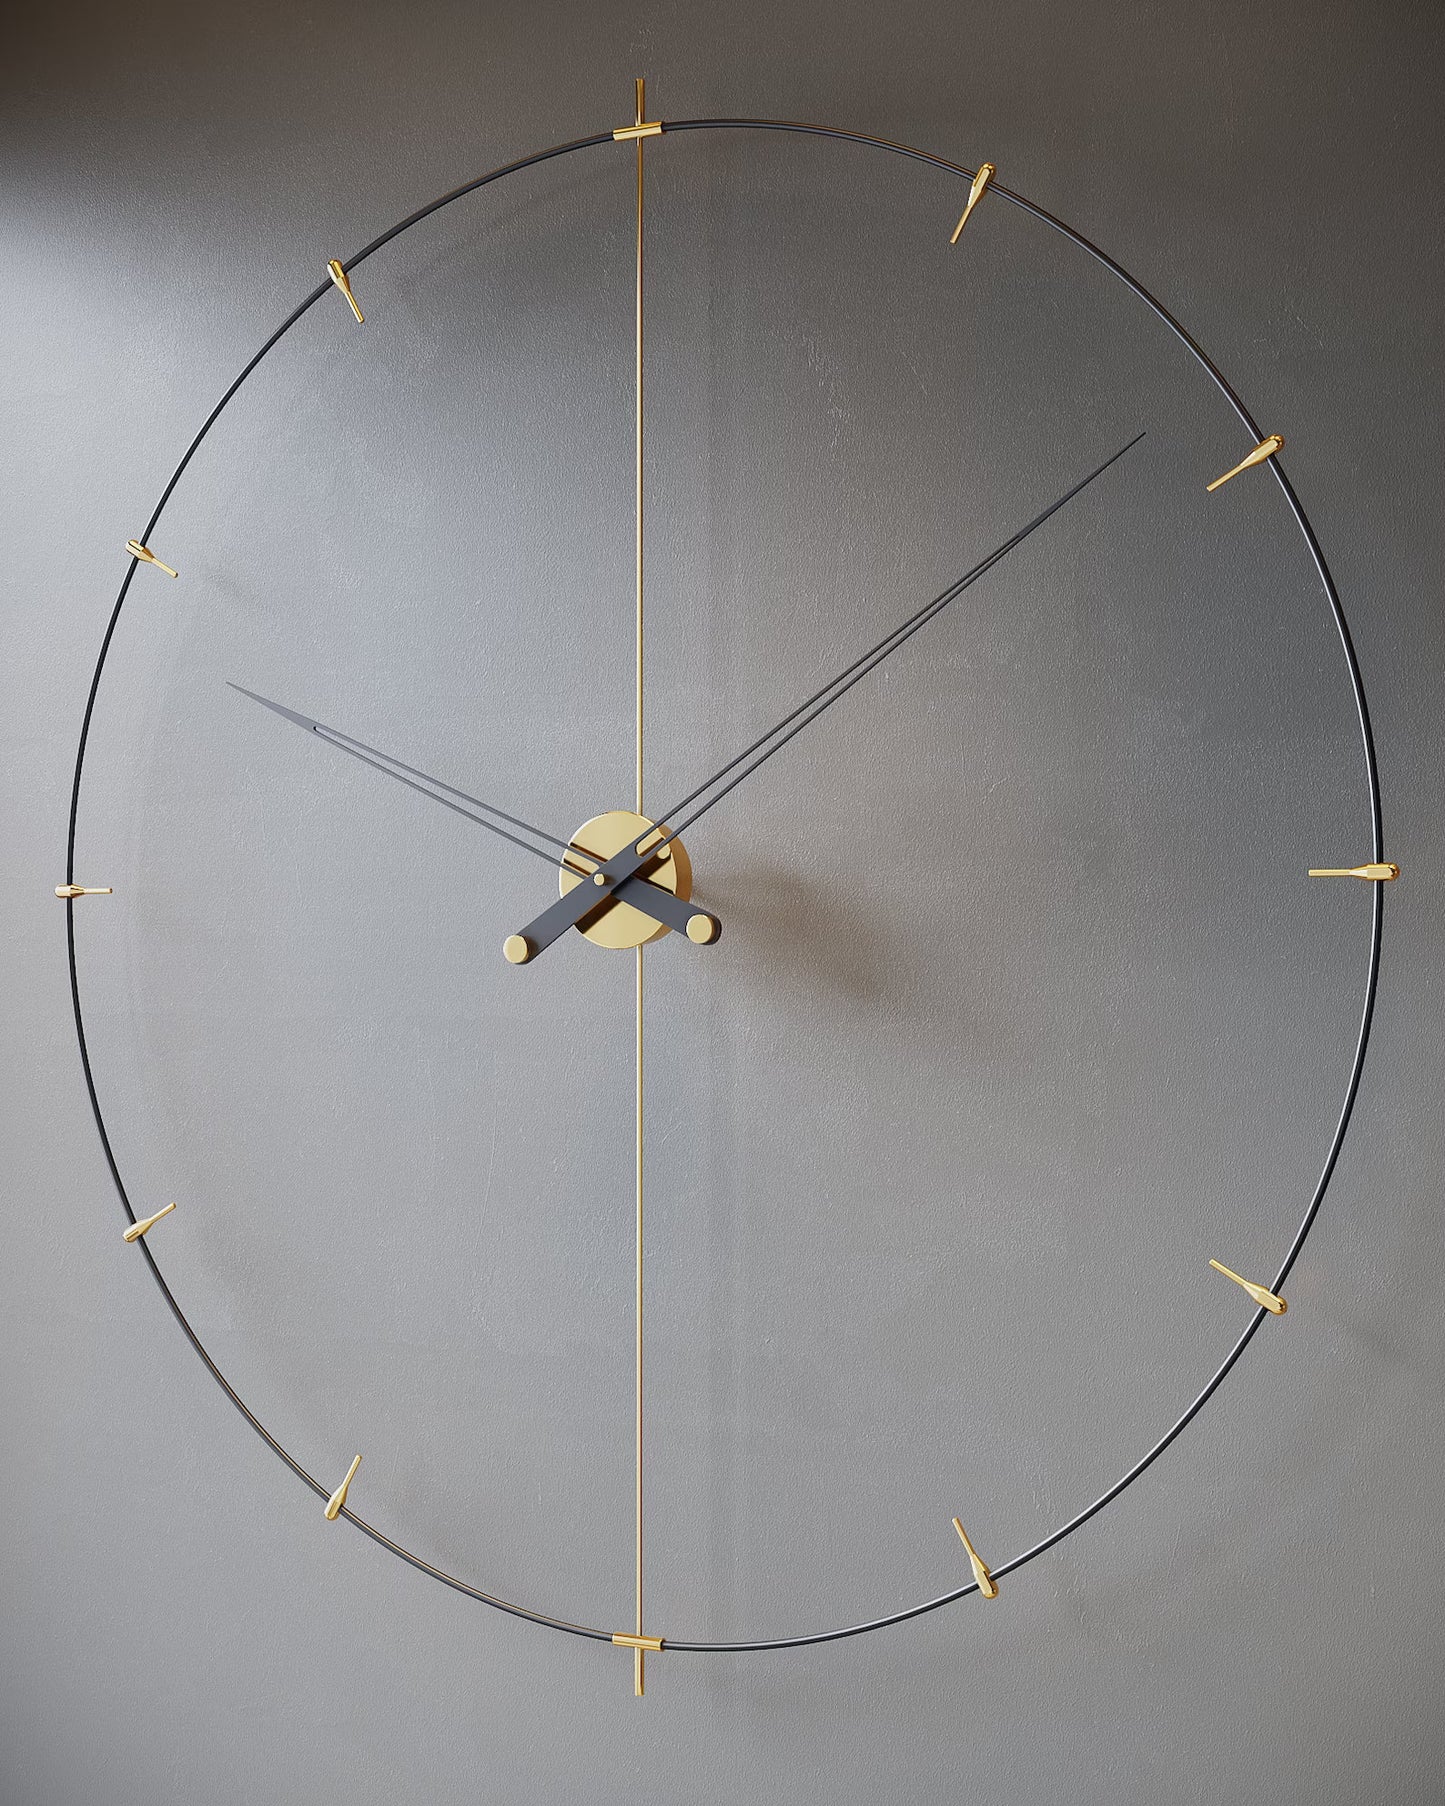 Black & Golden Handmade Ring Designed Large Wall Clock for Living Room & Bedroom